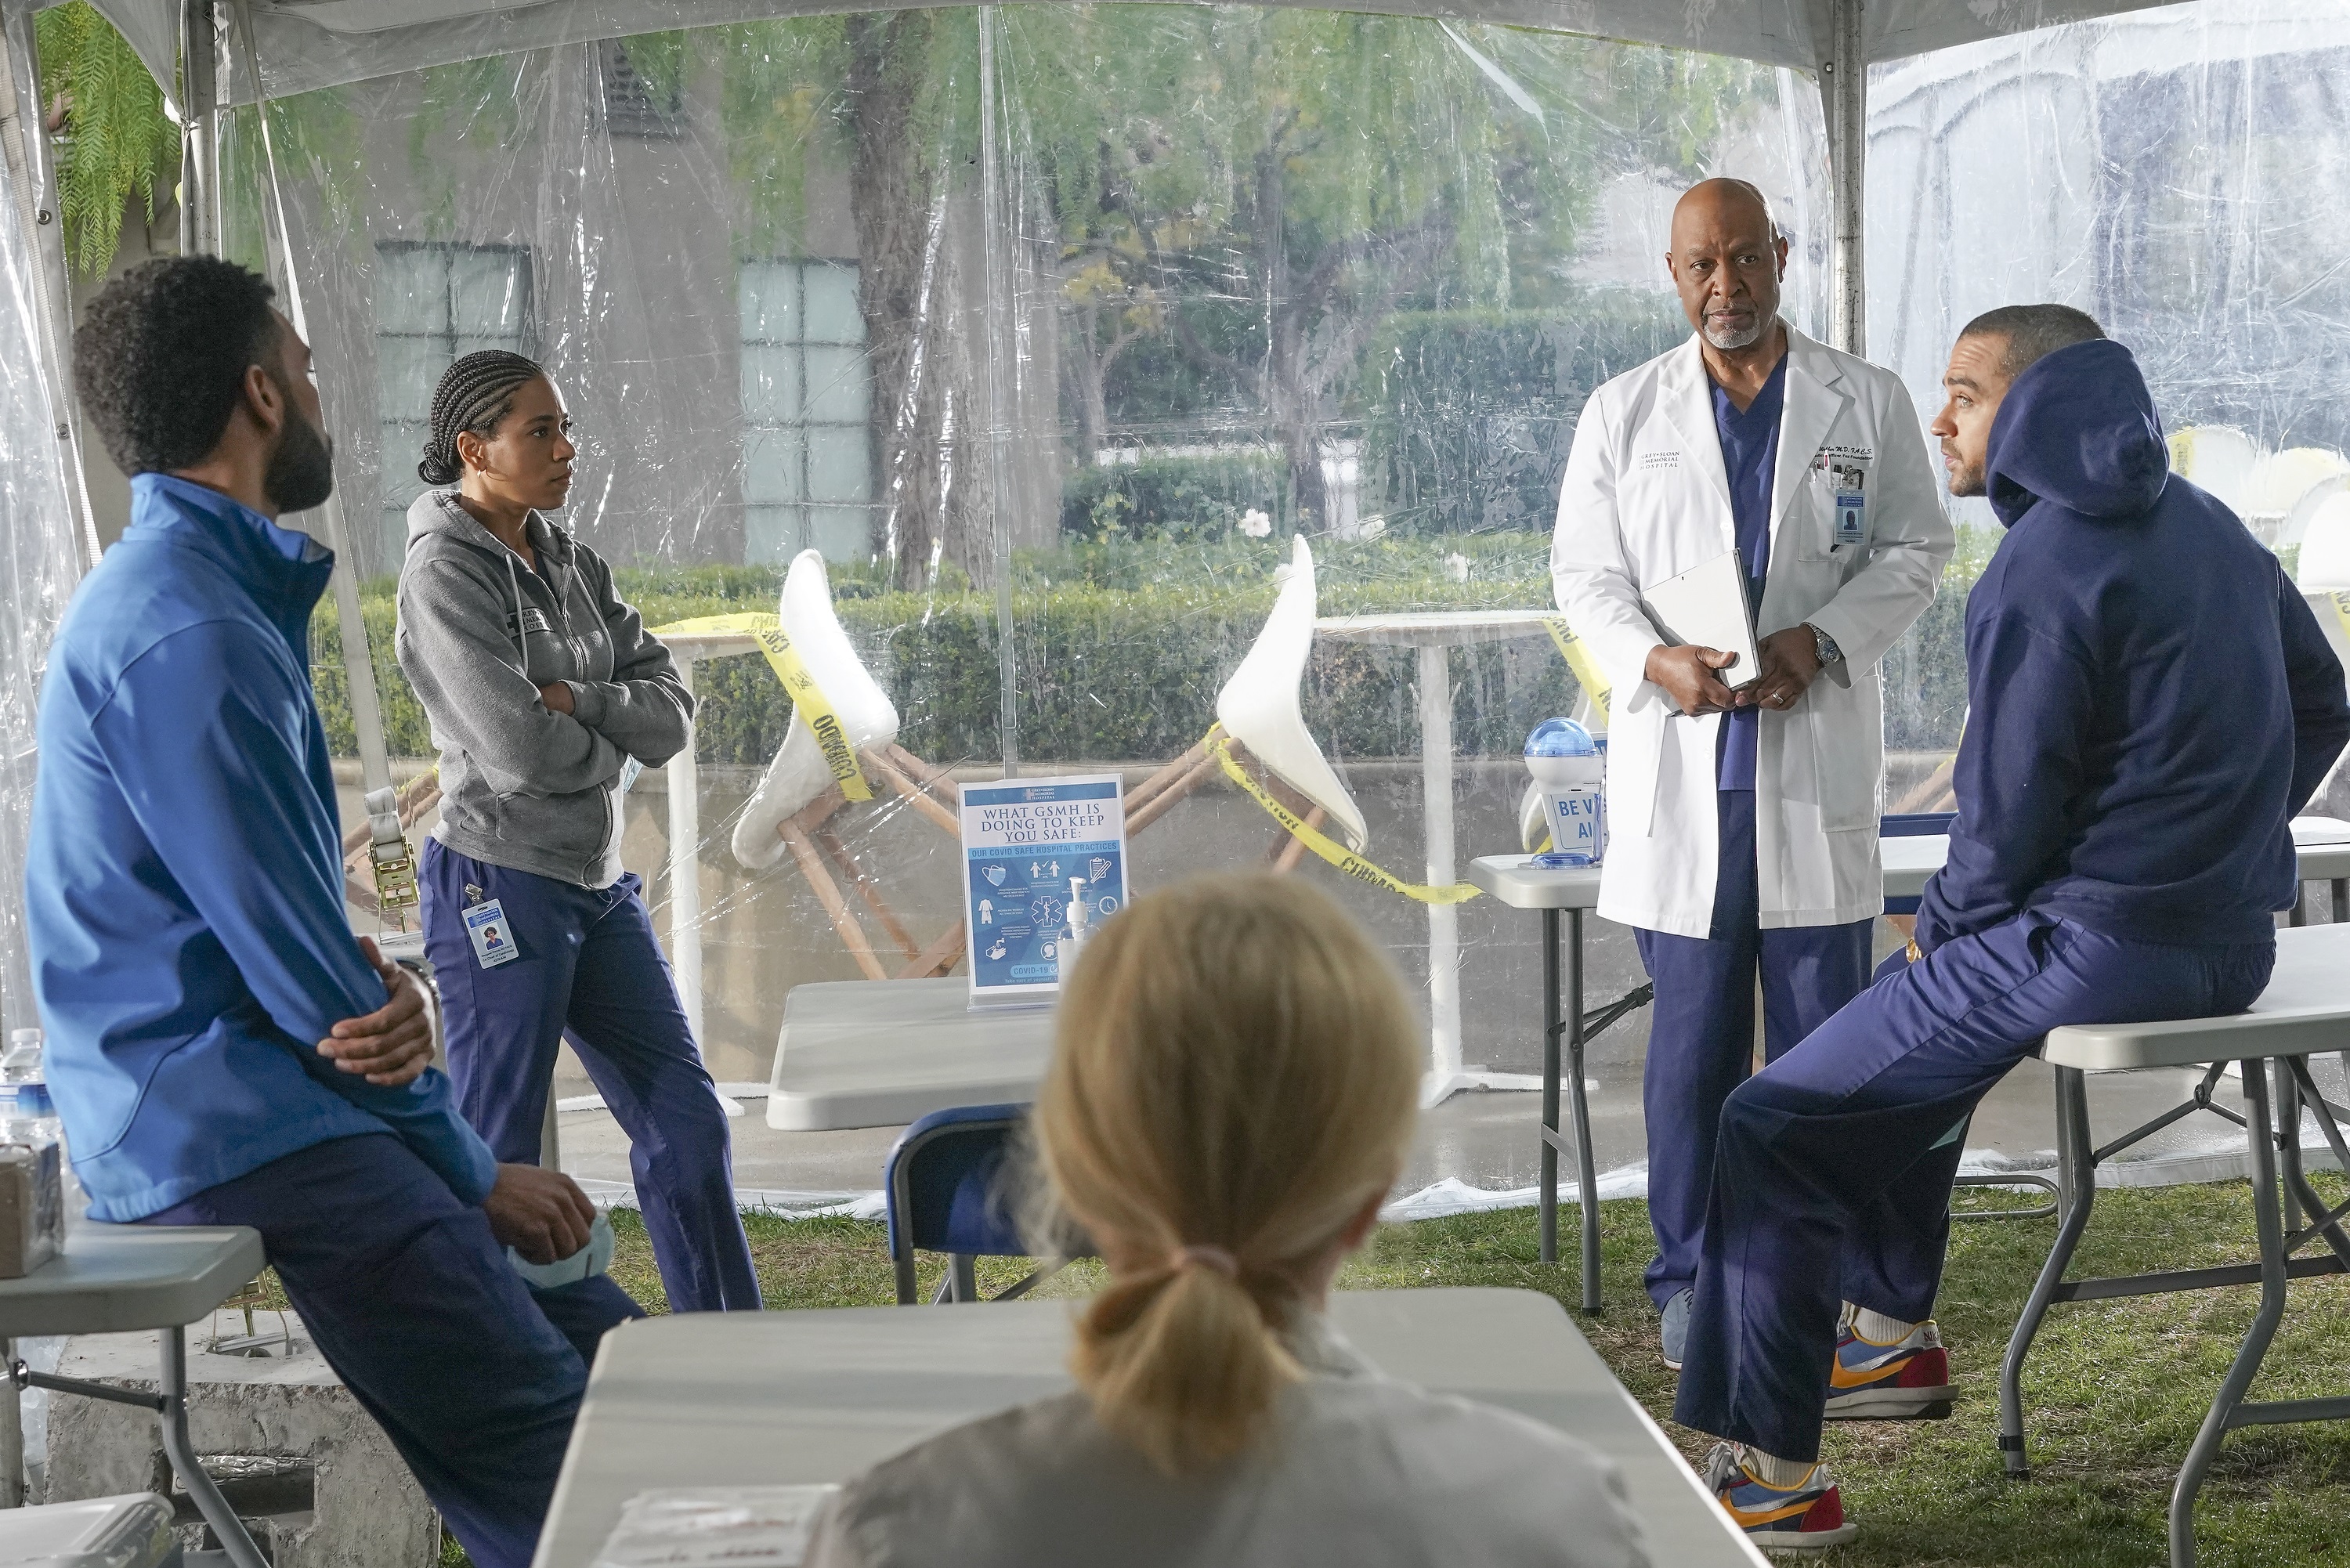 Greys Anatomy Season 17 episode 10 the doctors recap what is happening with Meredith Grey